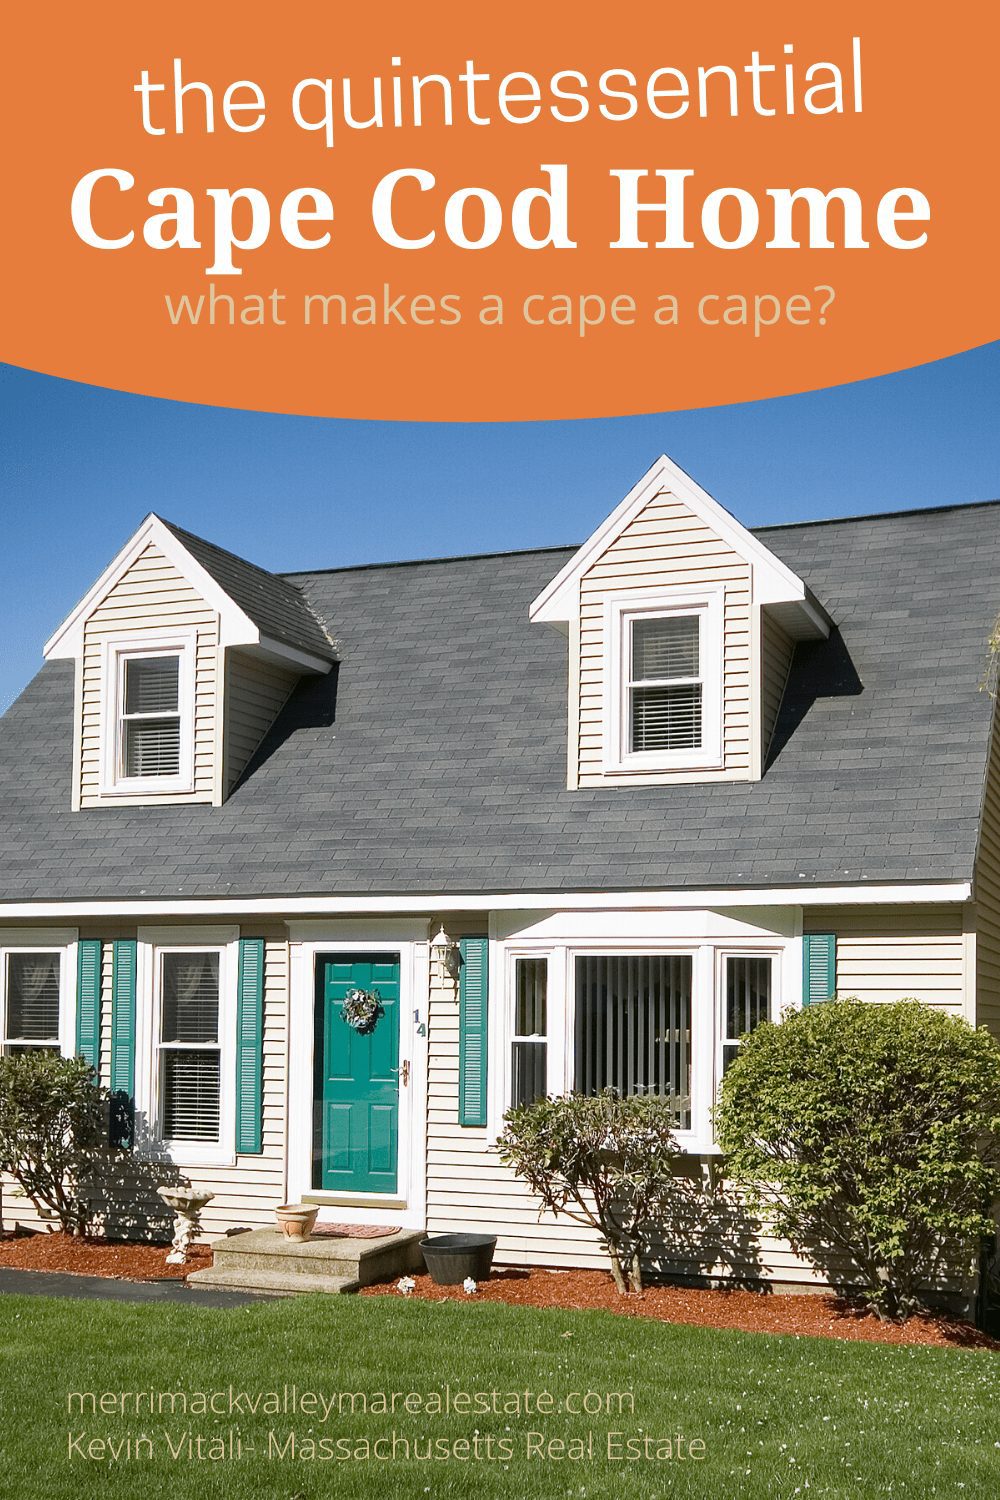 Cape Cod Home- What makes a cape a cape?